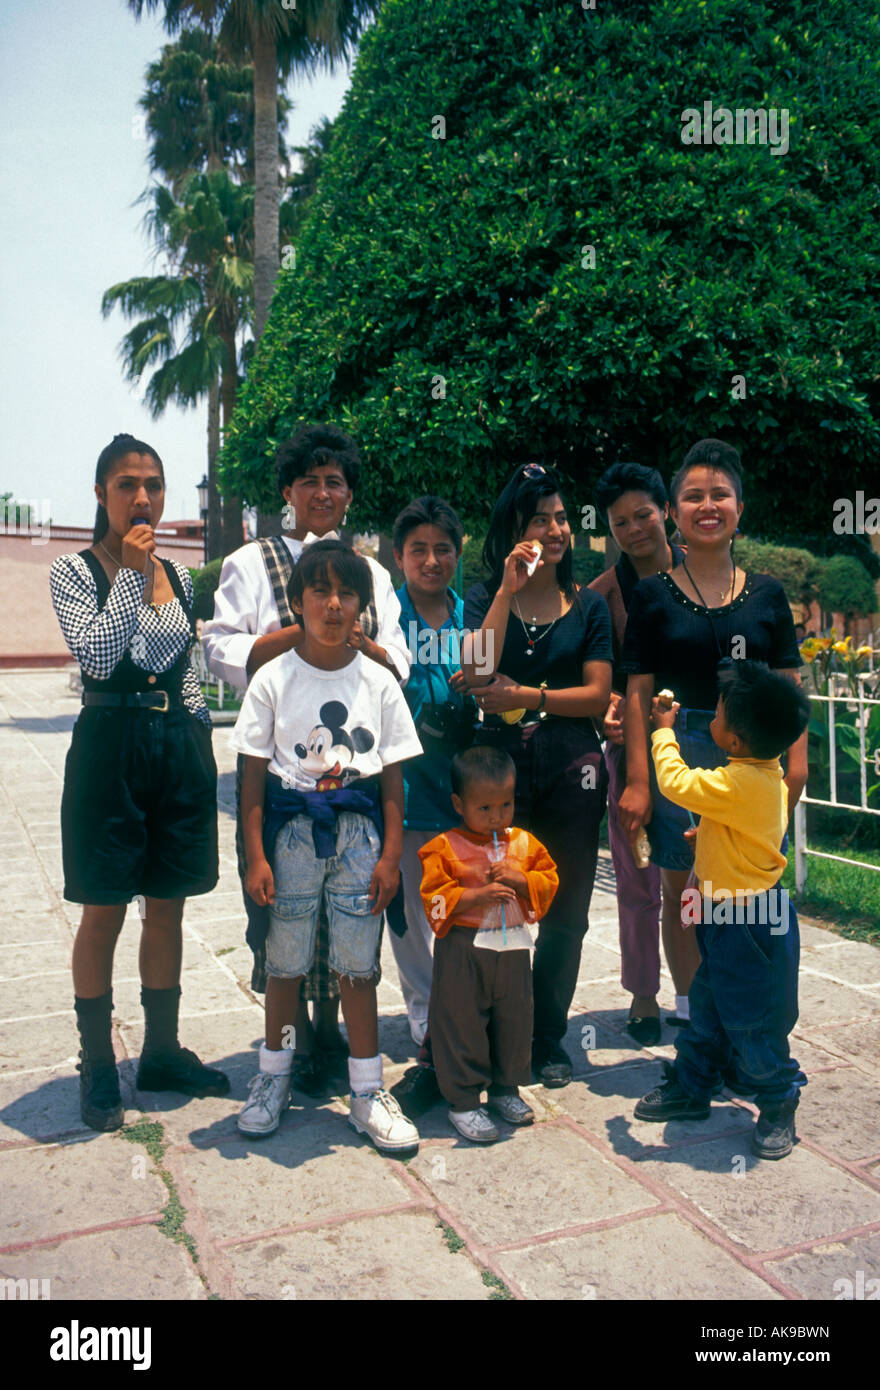 Mexican people, Mexican family, family, eye contact, front view, portrait, Plaza Principal, Bernal, San Sebastian Bernal, Queretaro State, Mexico Stock Photo